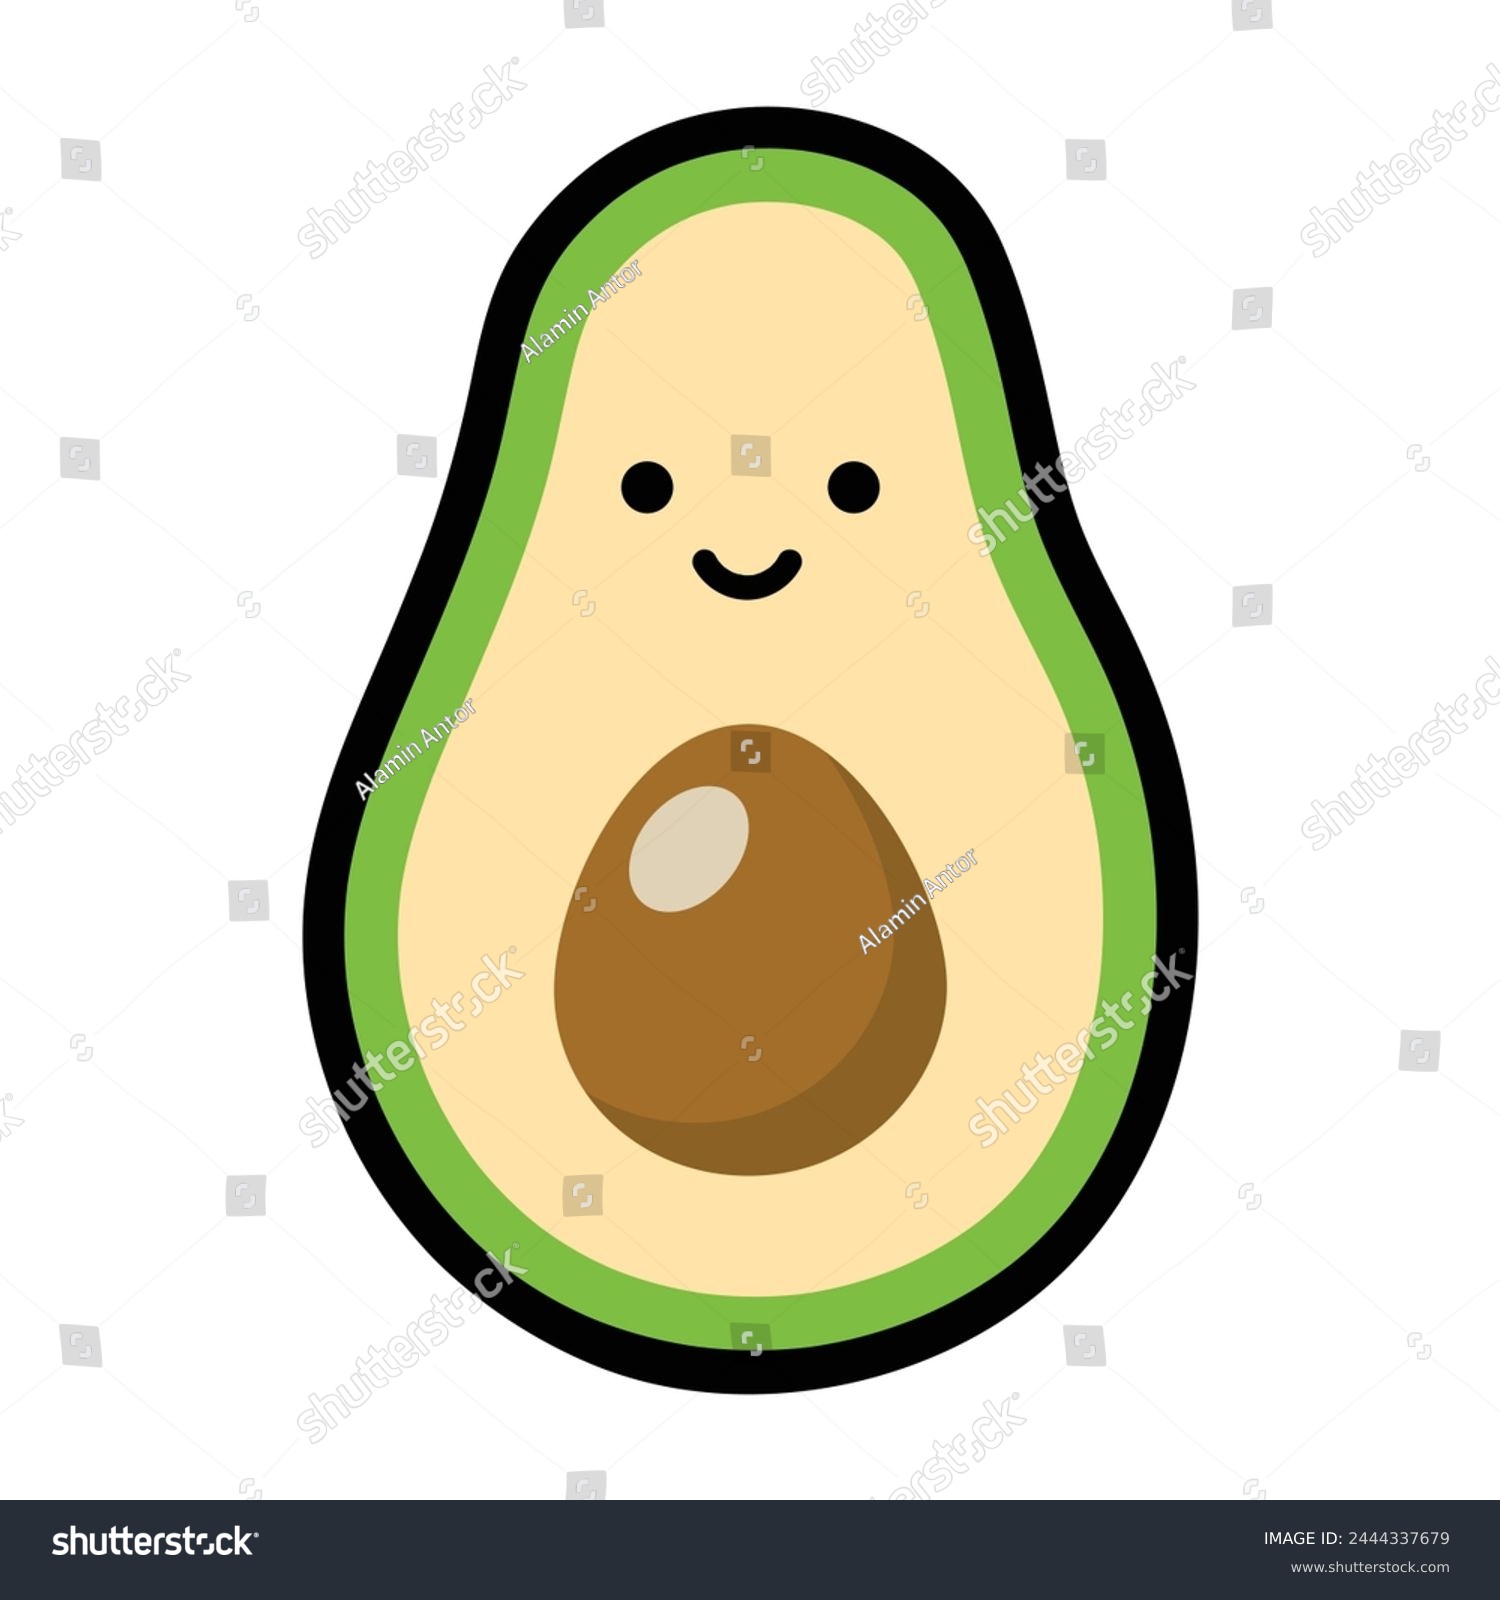 SVG of Kawaii Cute Avocado Drawing Vector illustration Graphics  svg